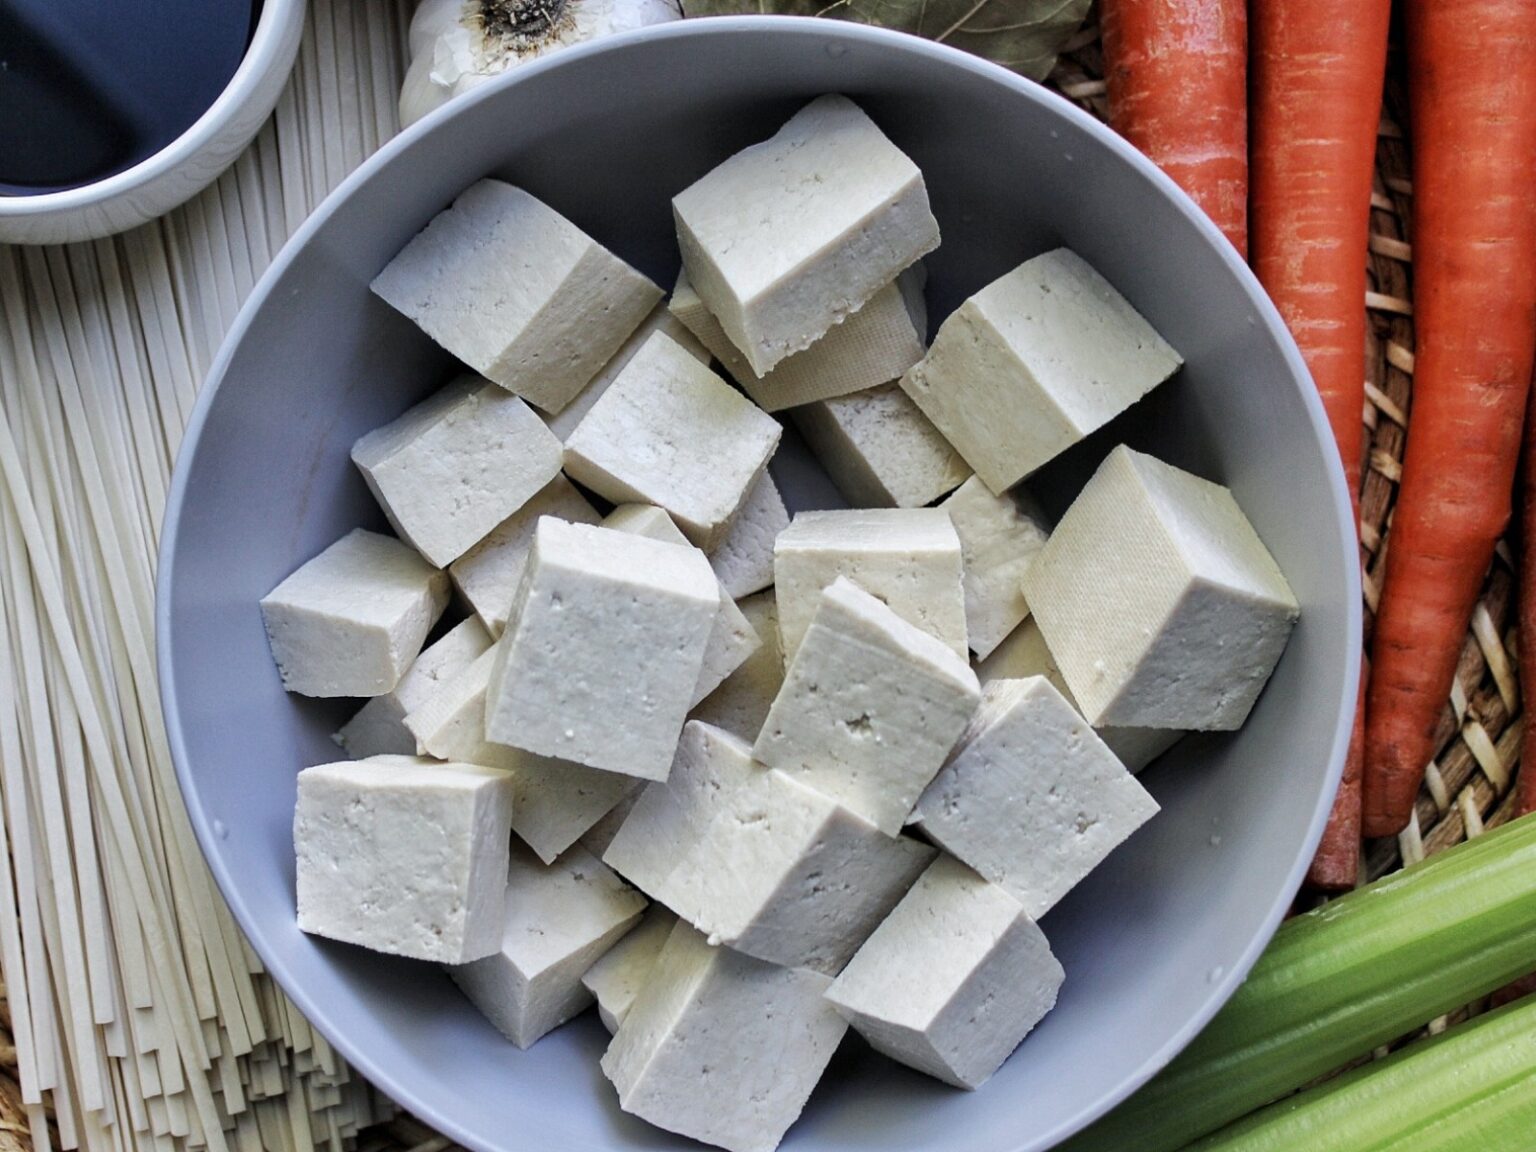 Cubed tofu in a bowl.